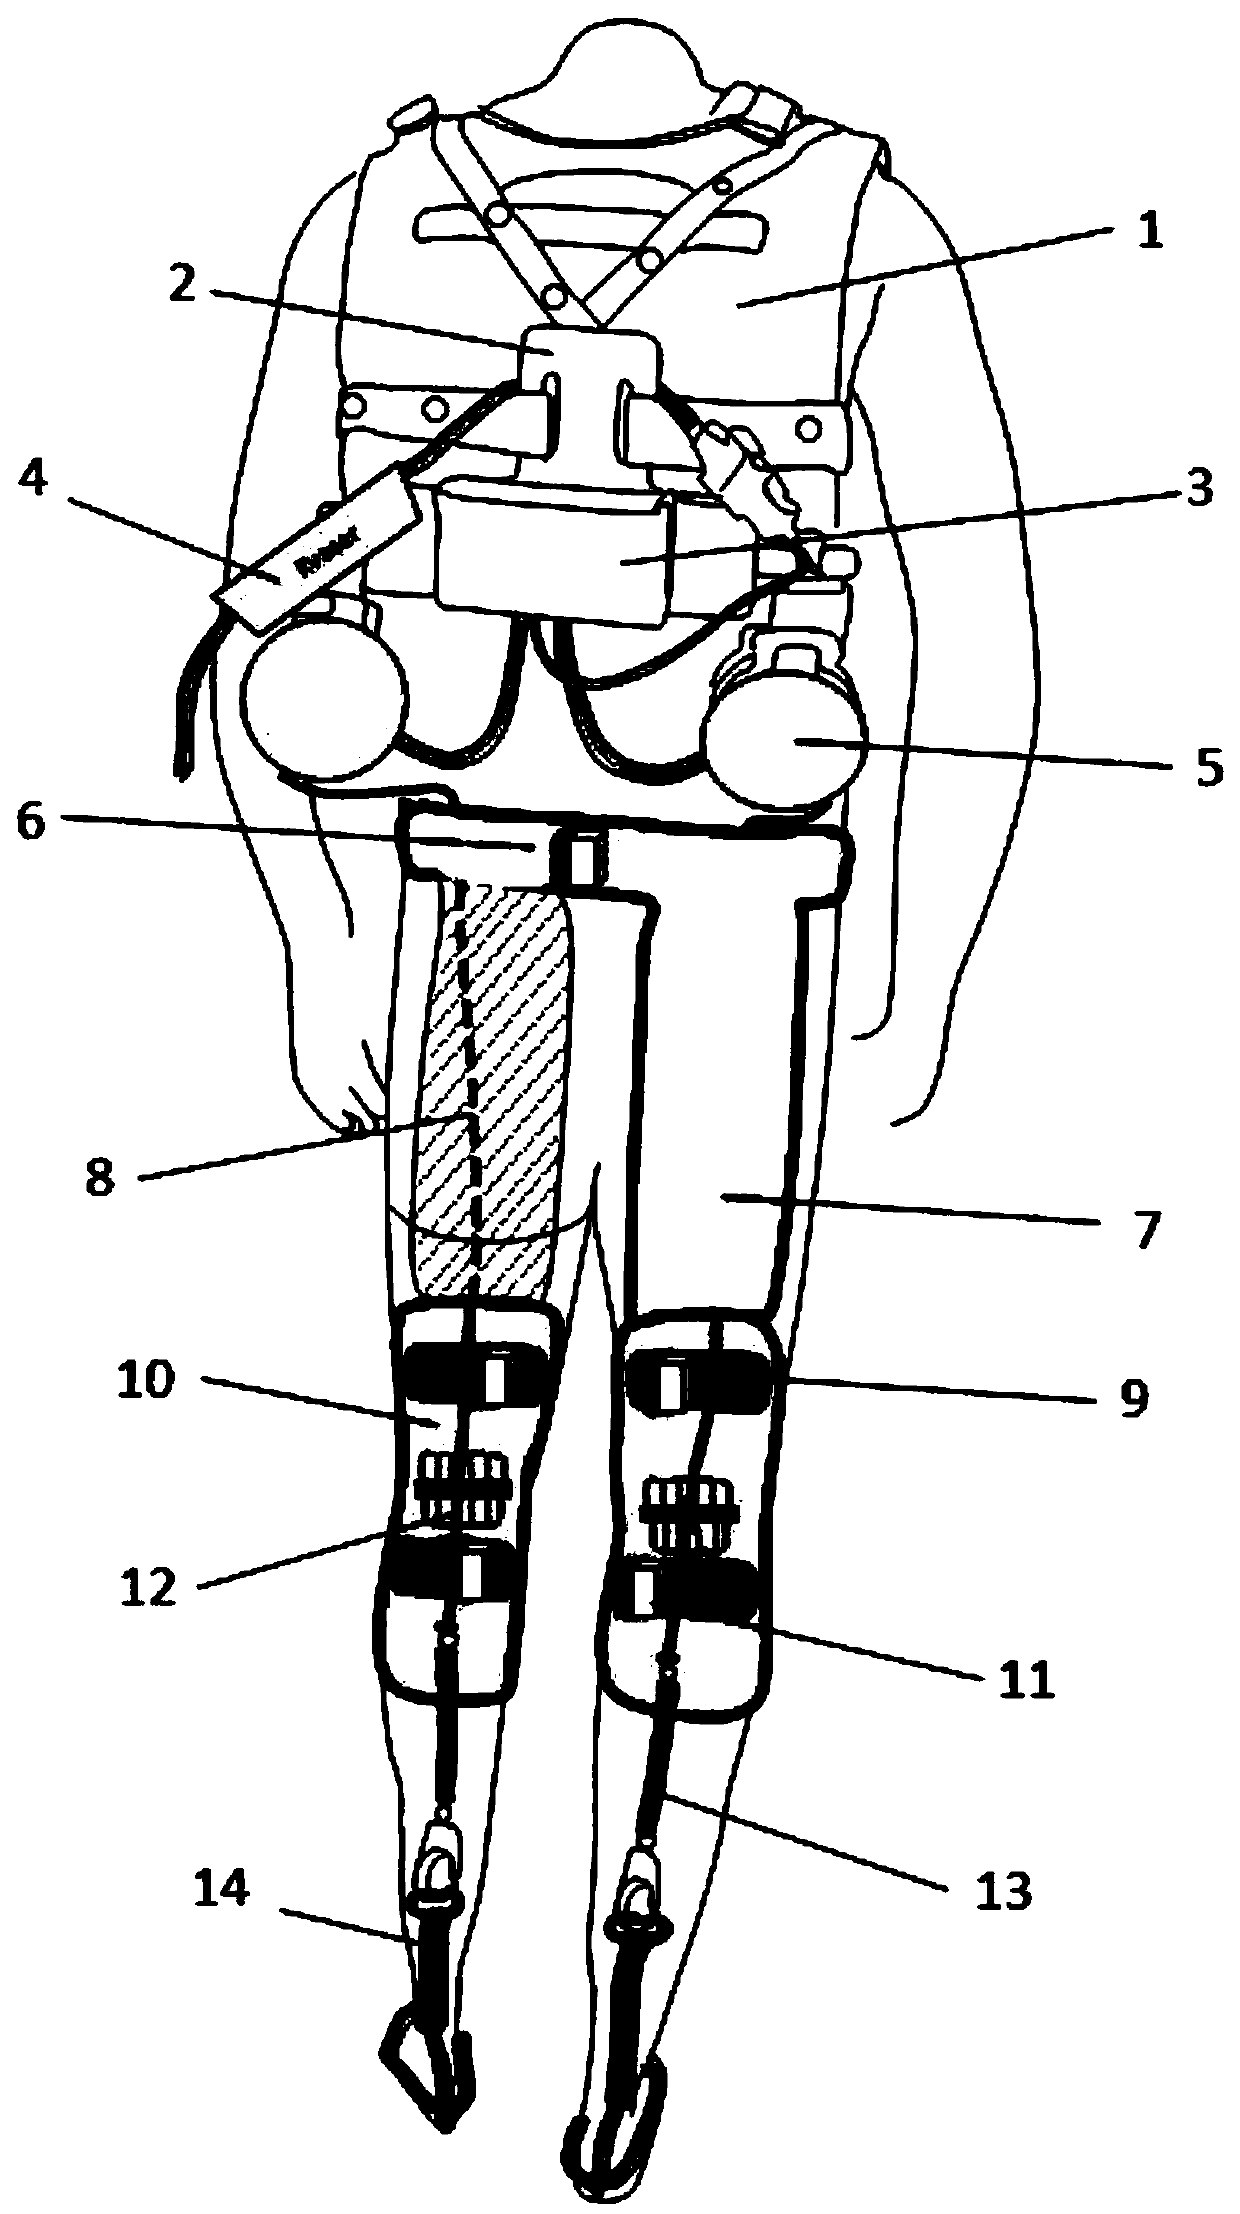 Wearable power-assisted flexible exoskeleton